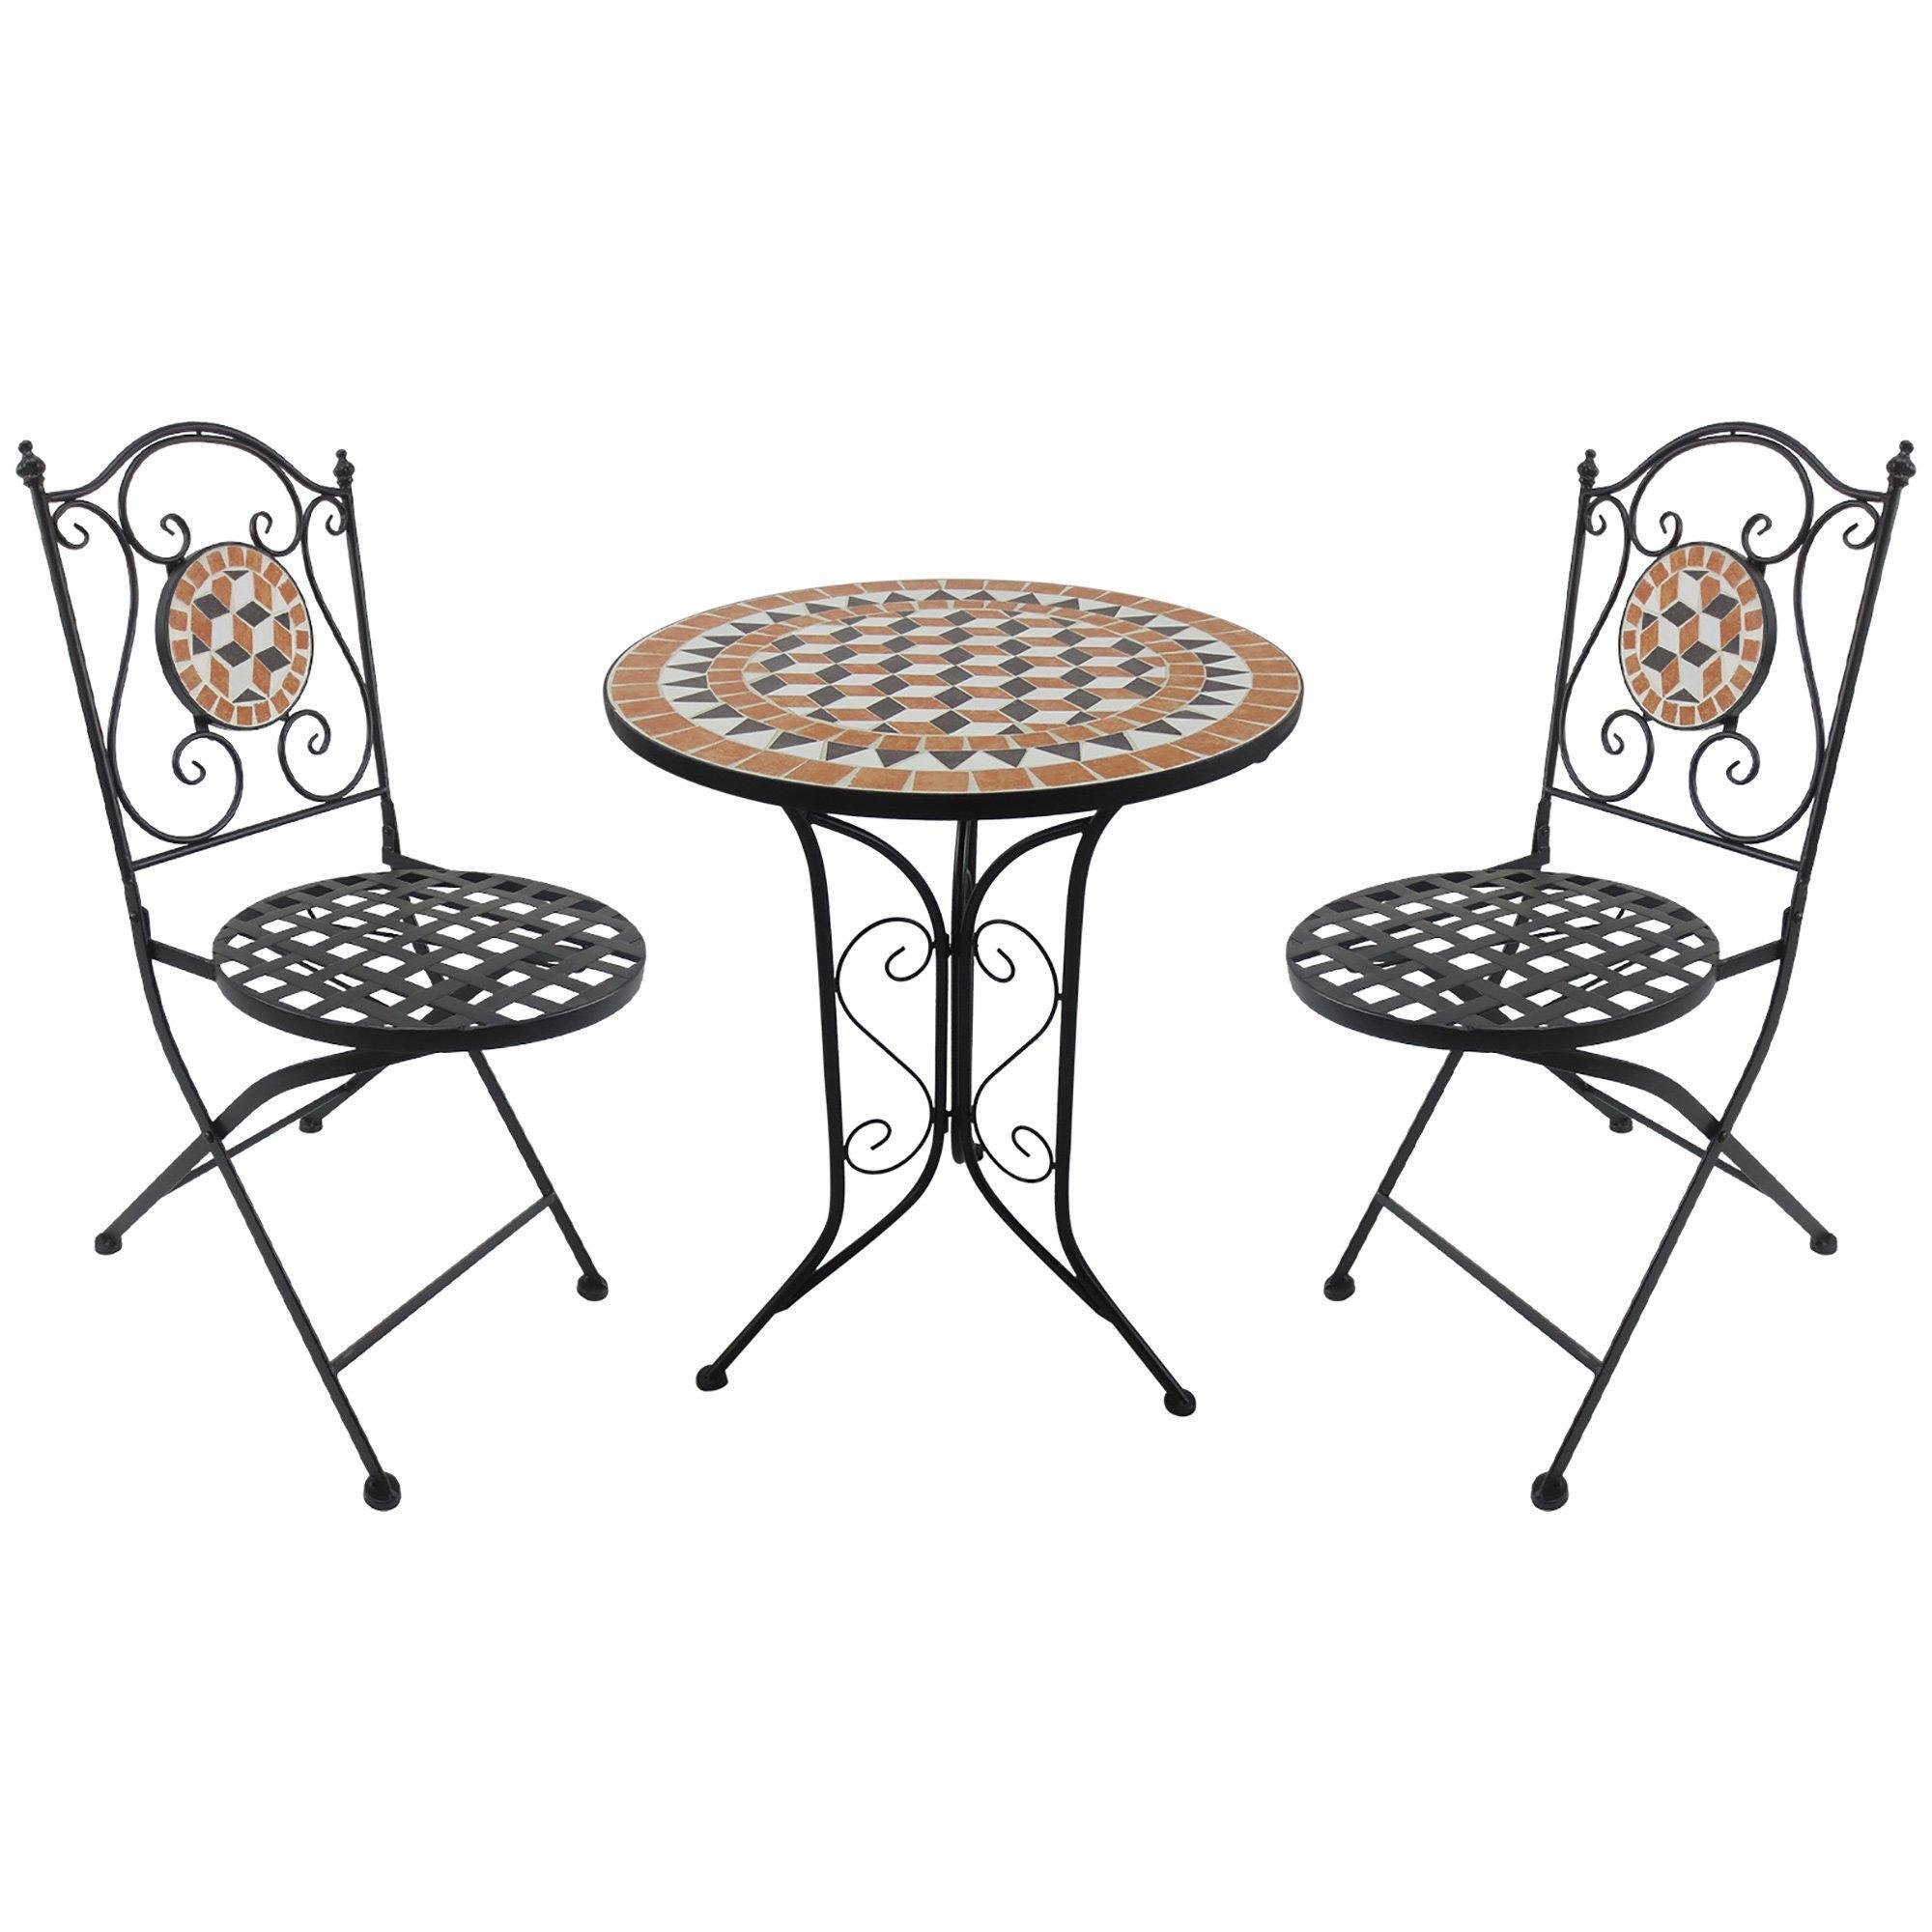 3 Pcs Mosaic Bistro Table Chair Set Patio Garden Dining Furniture - image 1